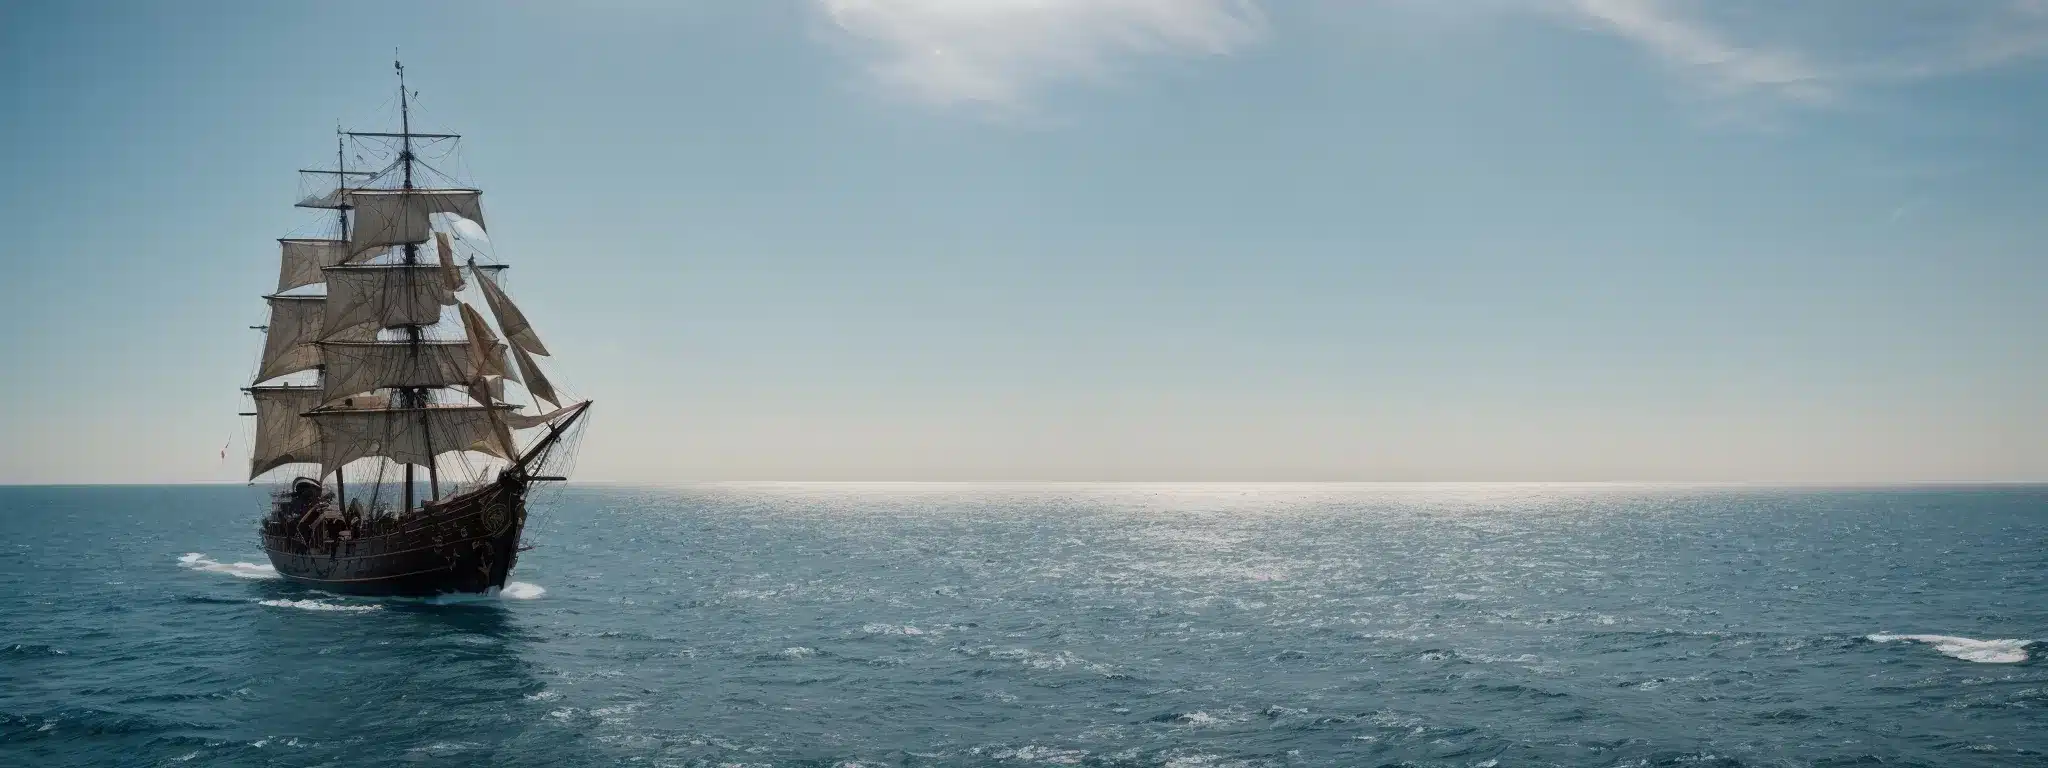 A Pirate Ship Sets Sail On A Calm Ocean Towards A Bustling Coastal City Under A Clear Blue Sky.